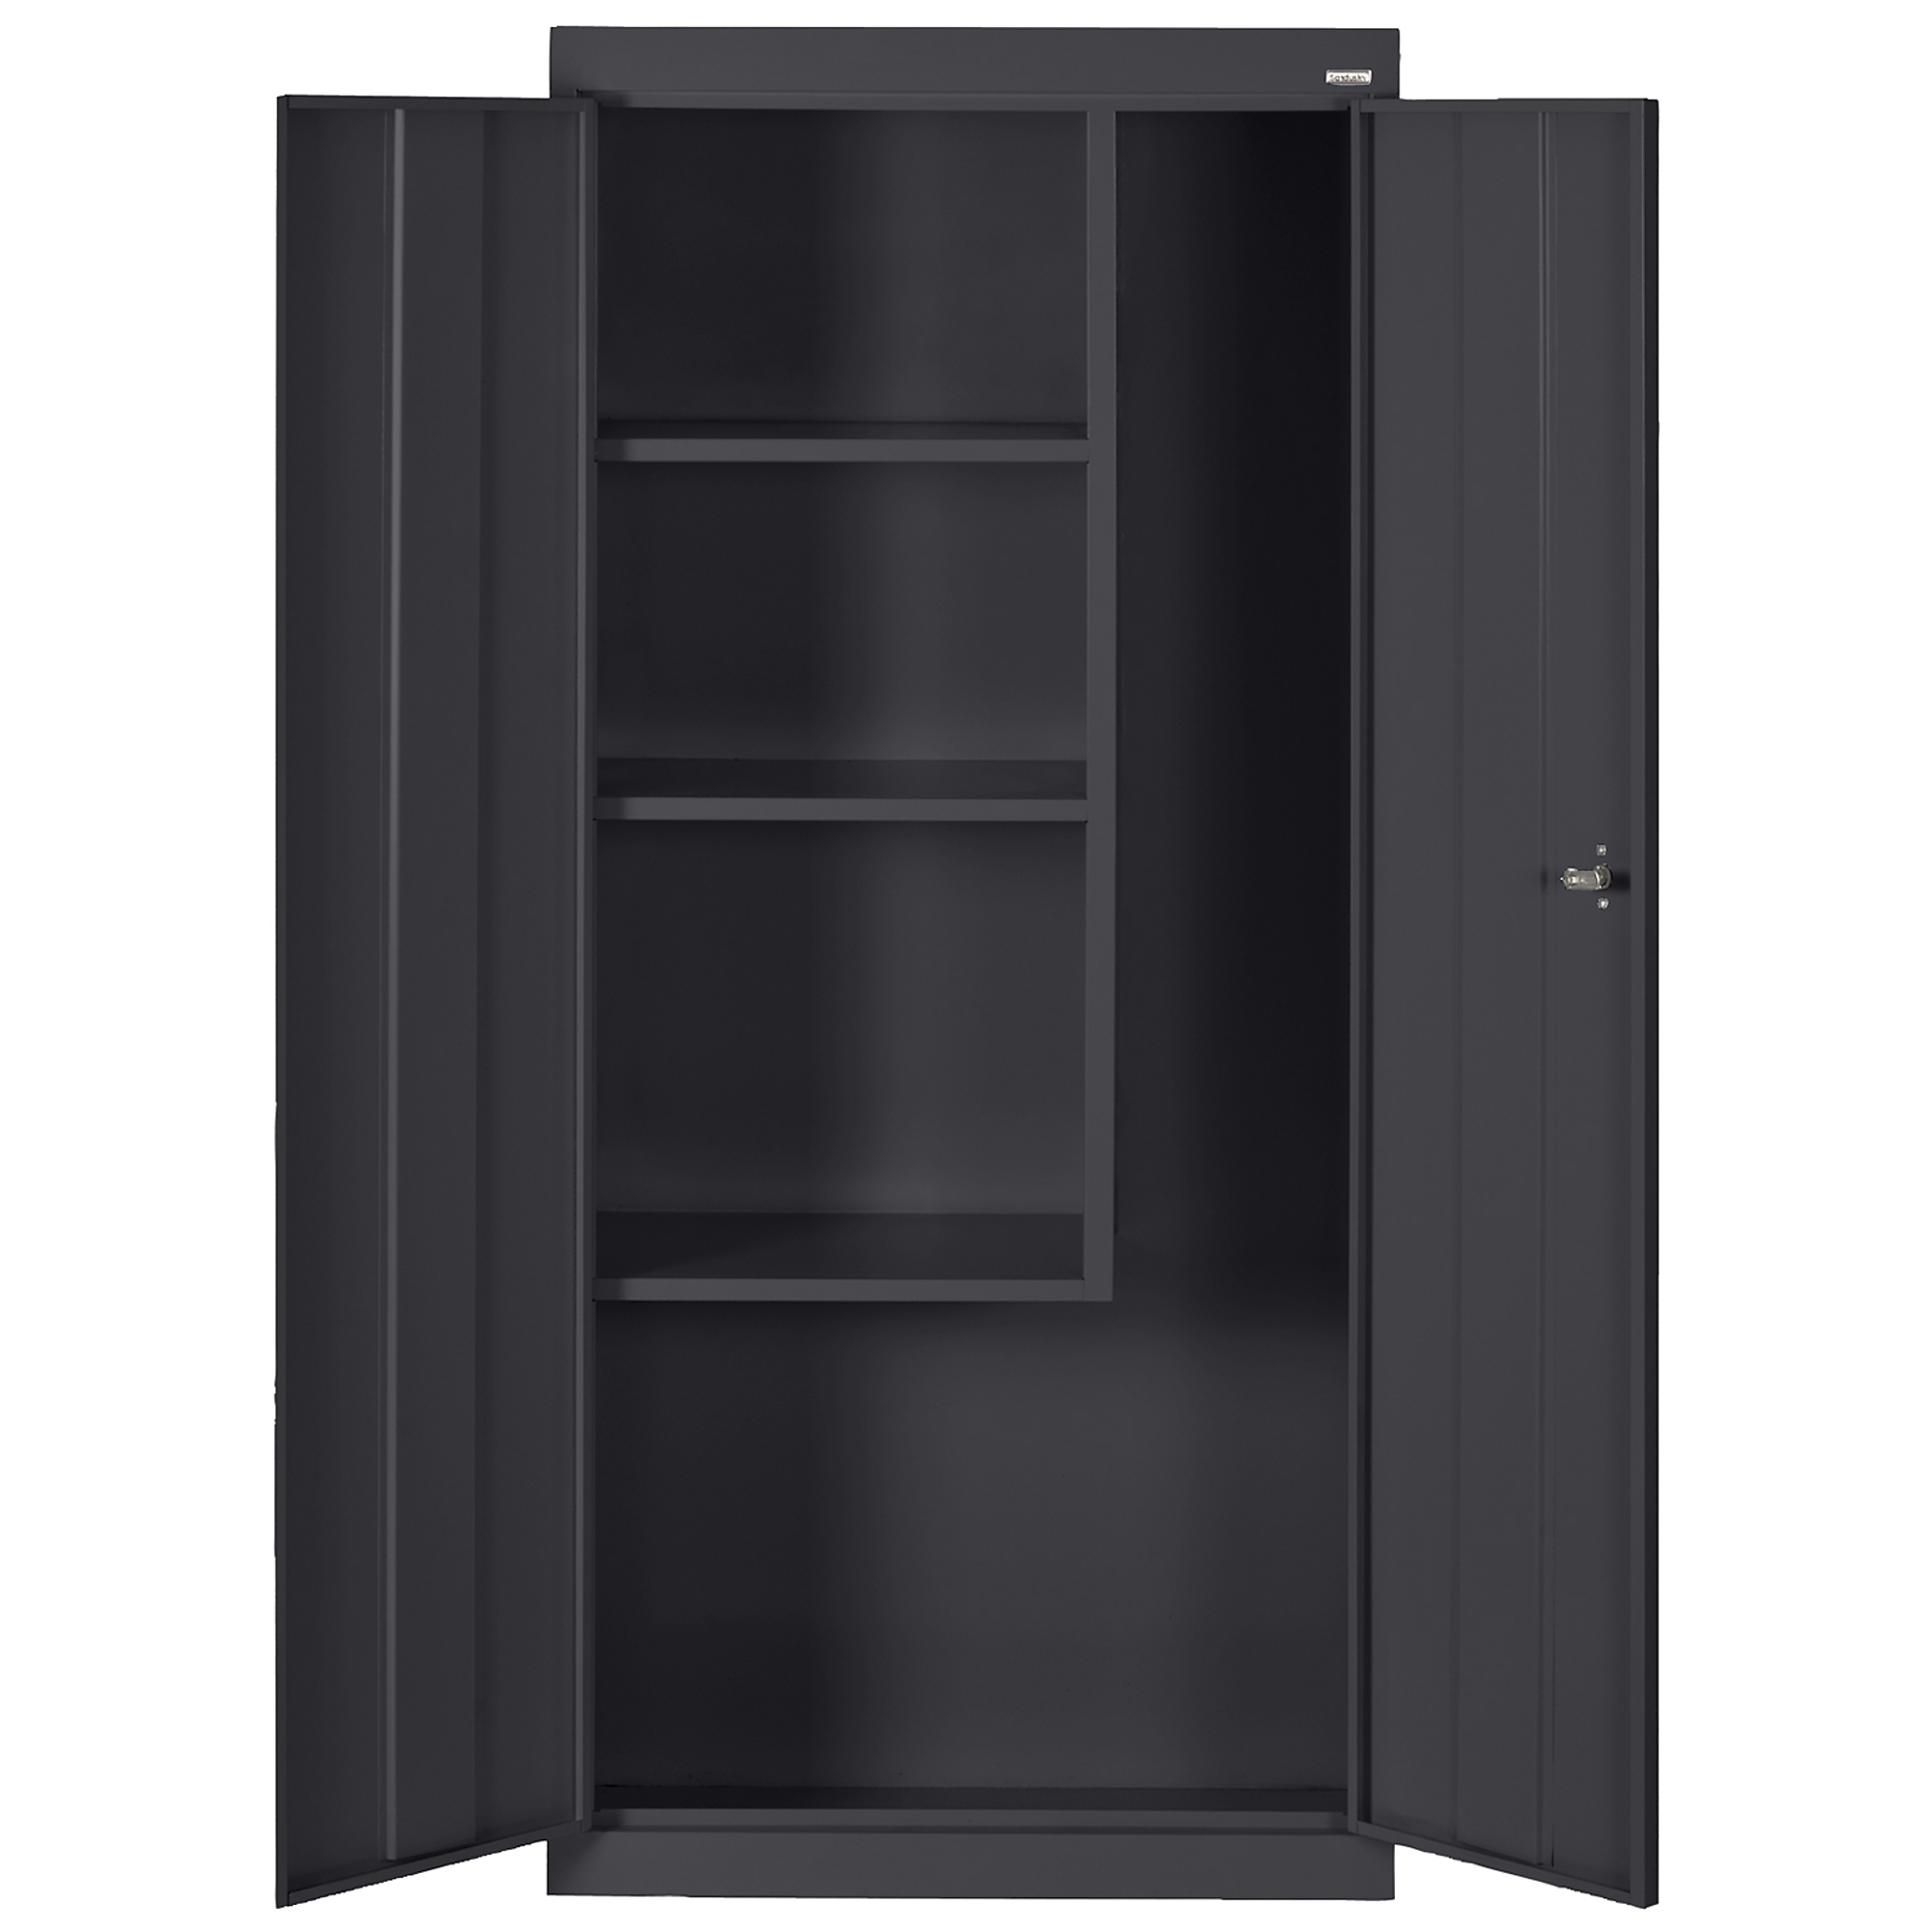 Sandusky Lee Sandusky, Supply Cabinet 30x18x66 - Black, Height 66 in, Width 30 in, Color Black, Model VFC1301866-05 -  VFC1301866-09